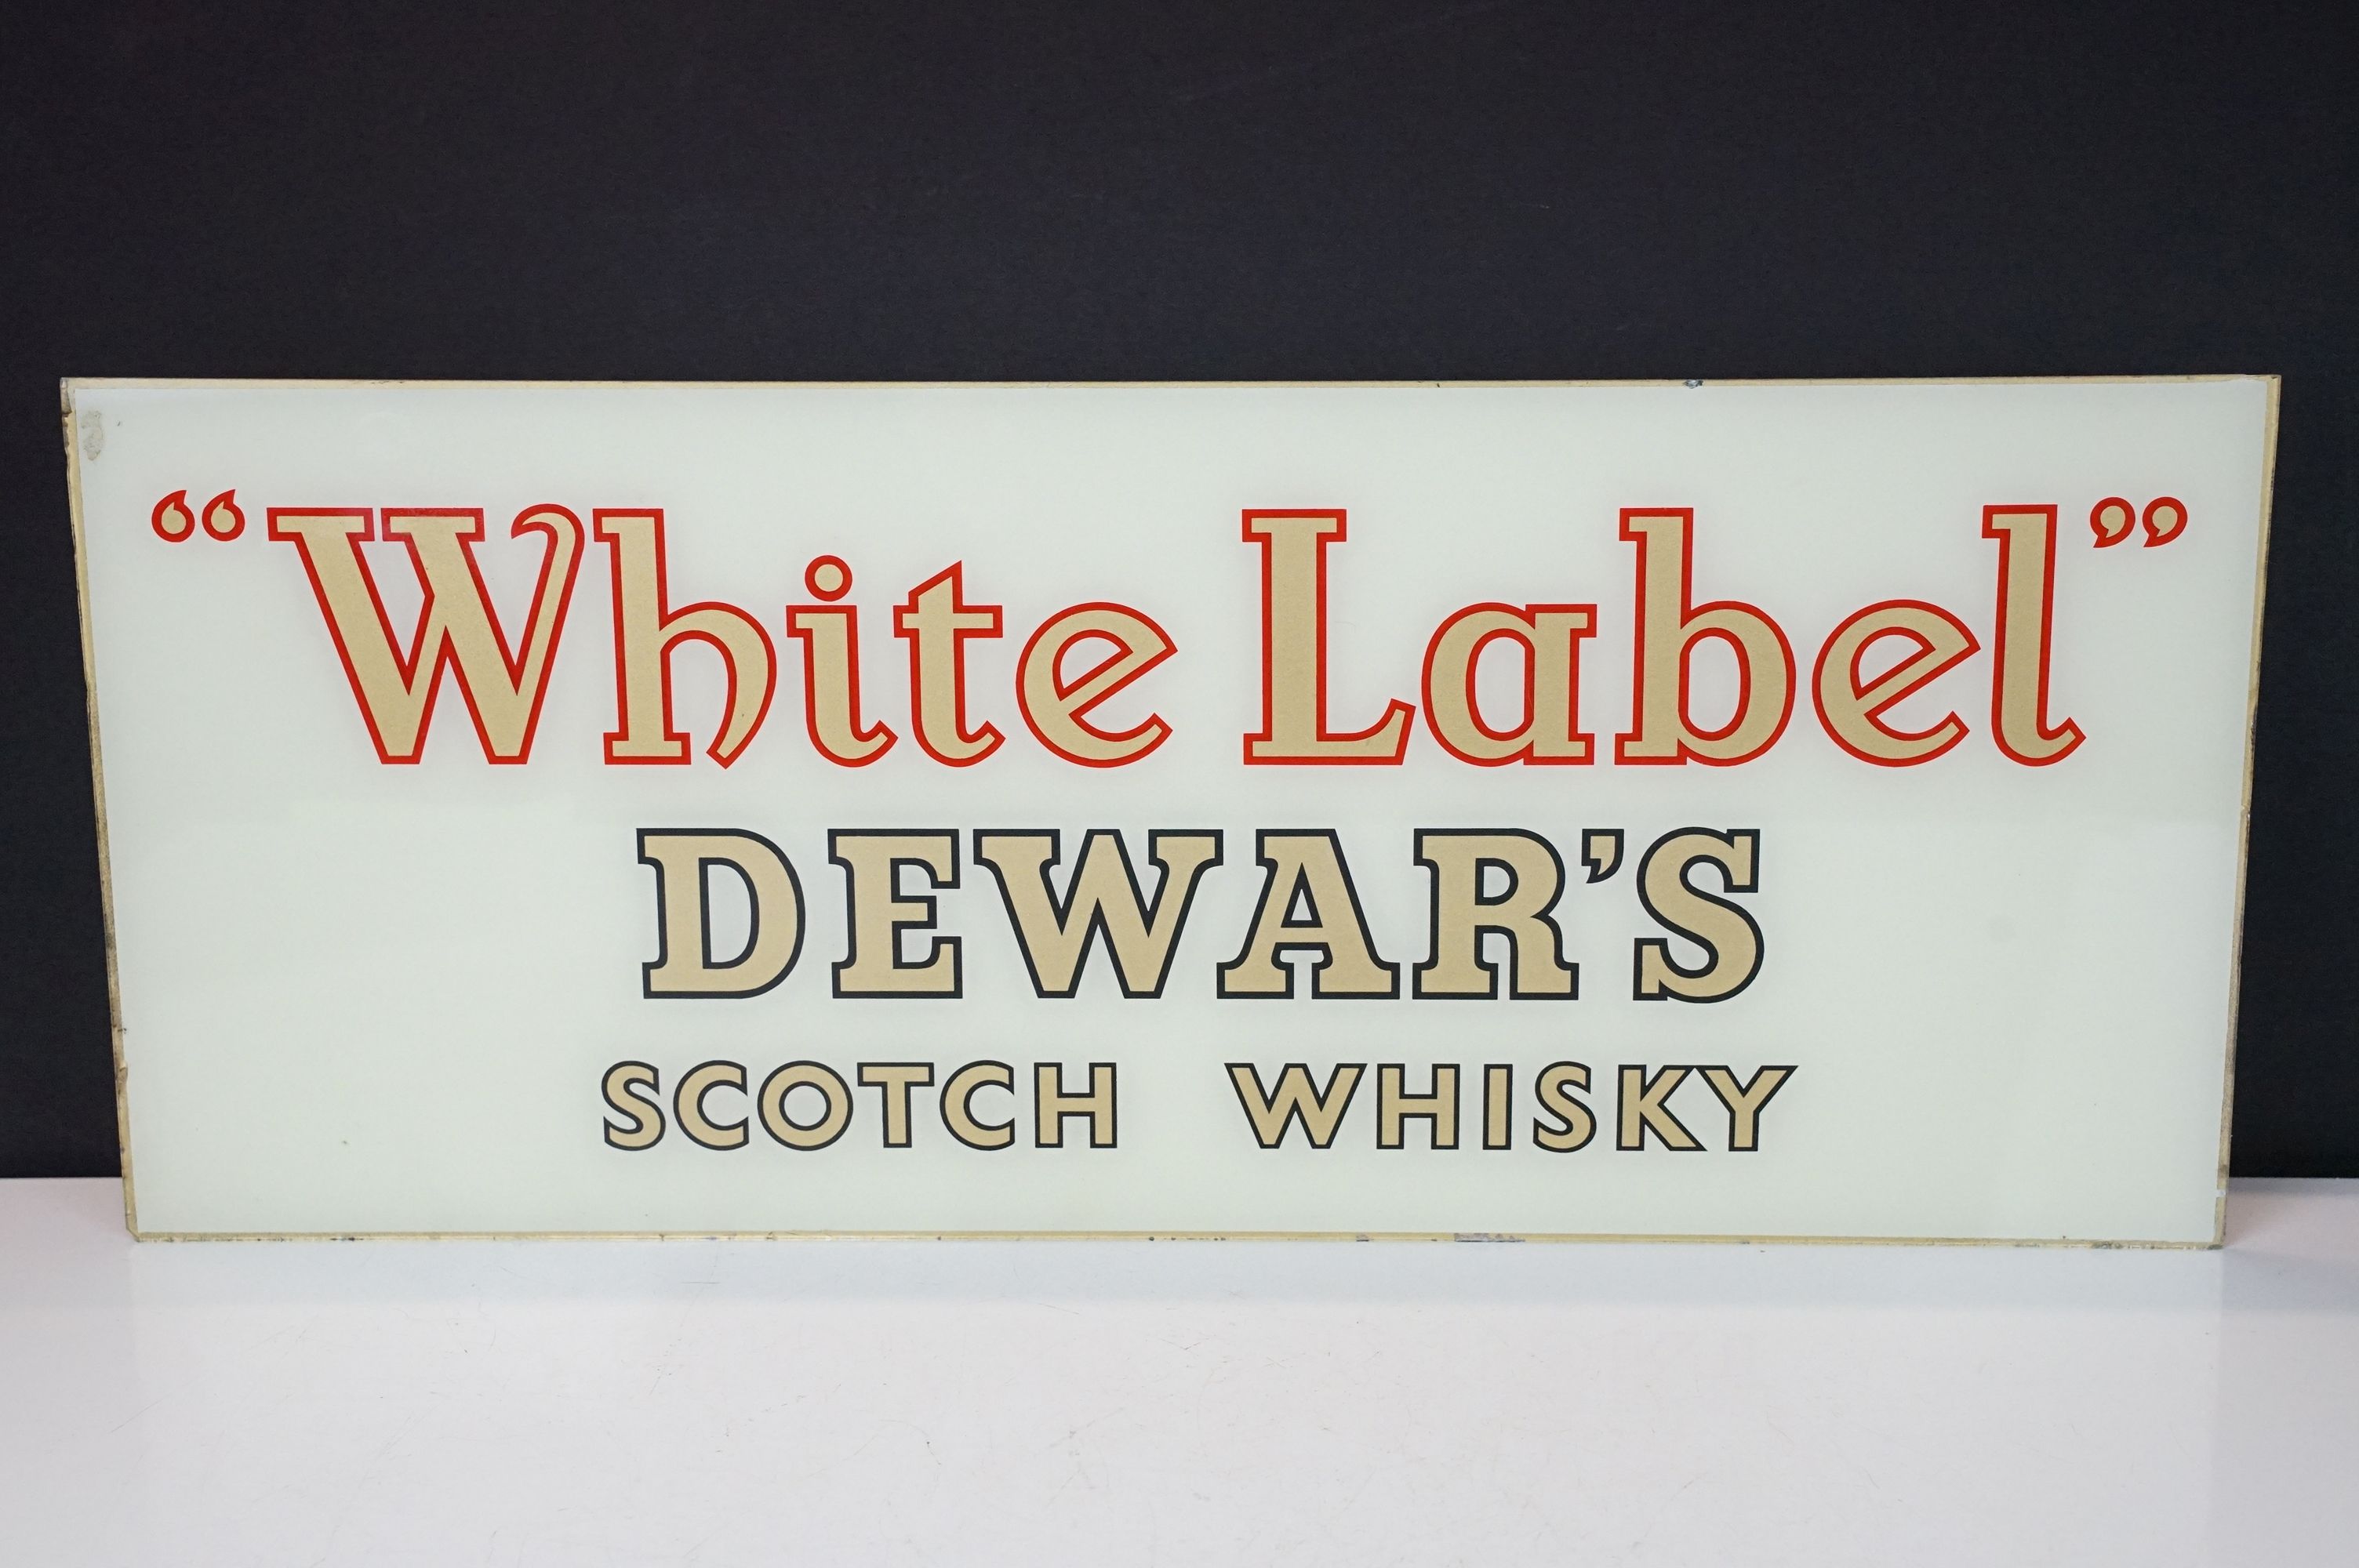 Vintage reverse printed glass "White Label" Dewar's Scotch Whisky sign having gilt lettering on a